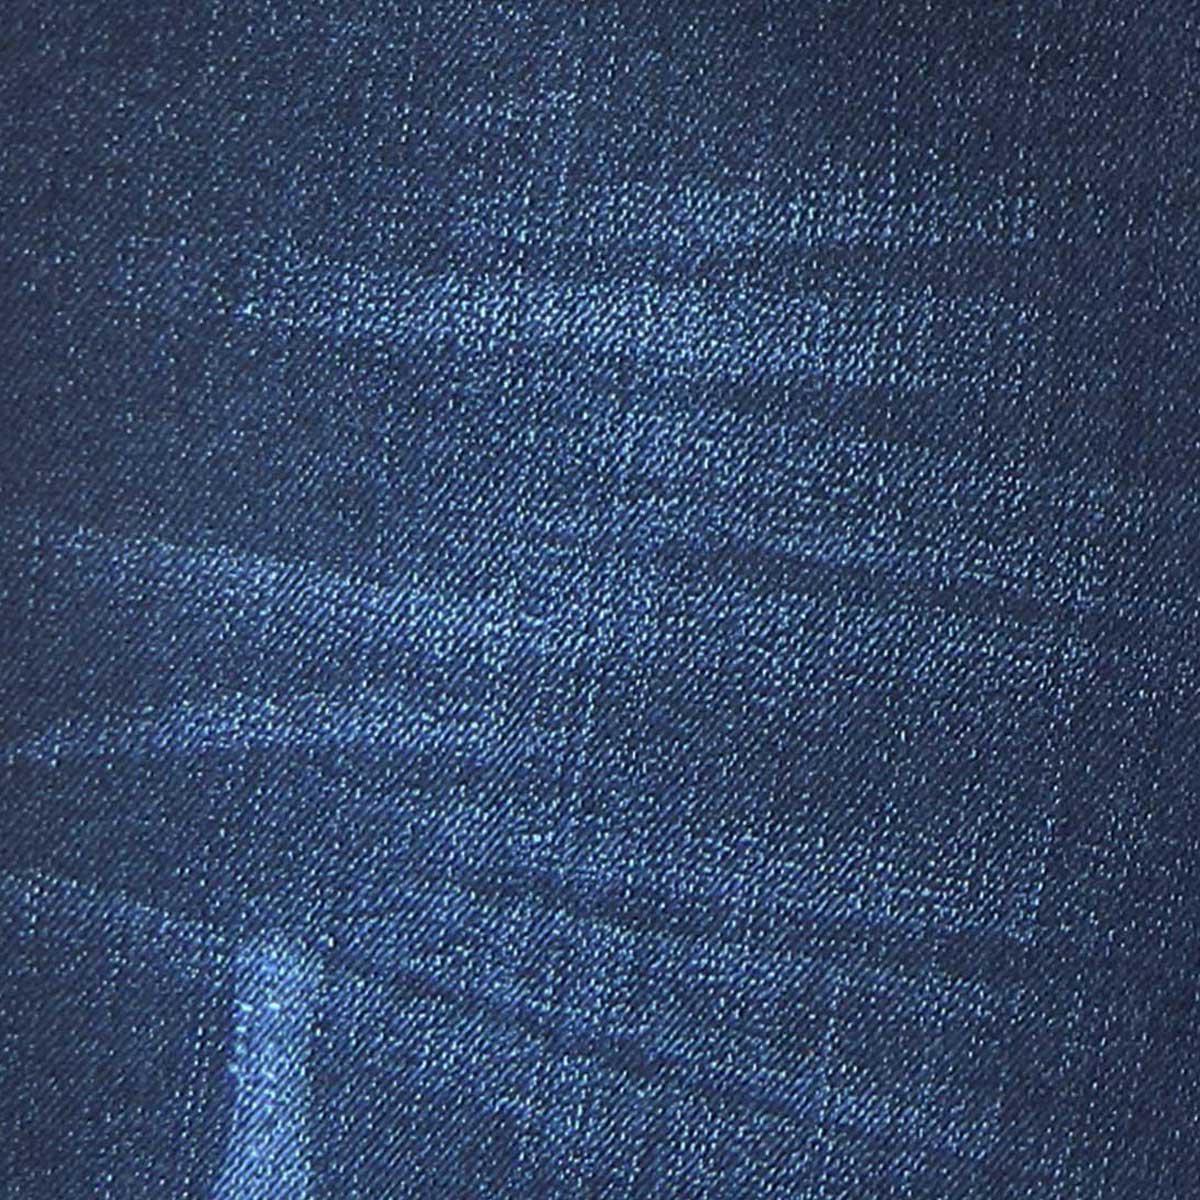 Jeans Contraste en Rodilla Natural